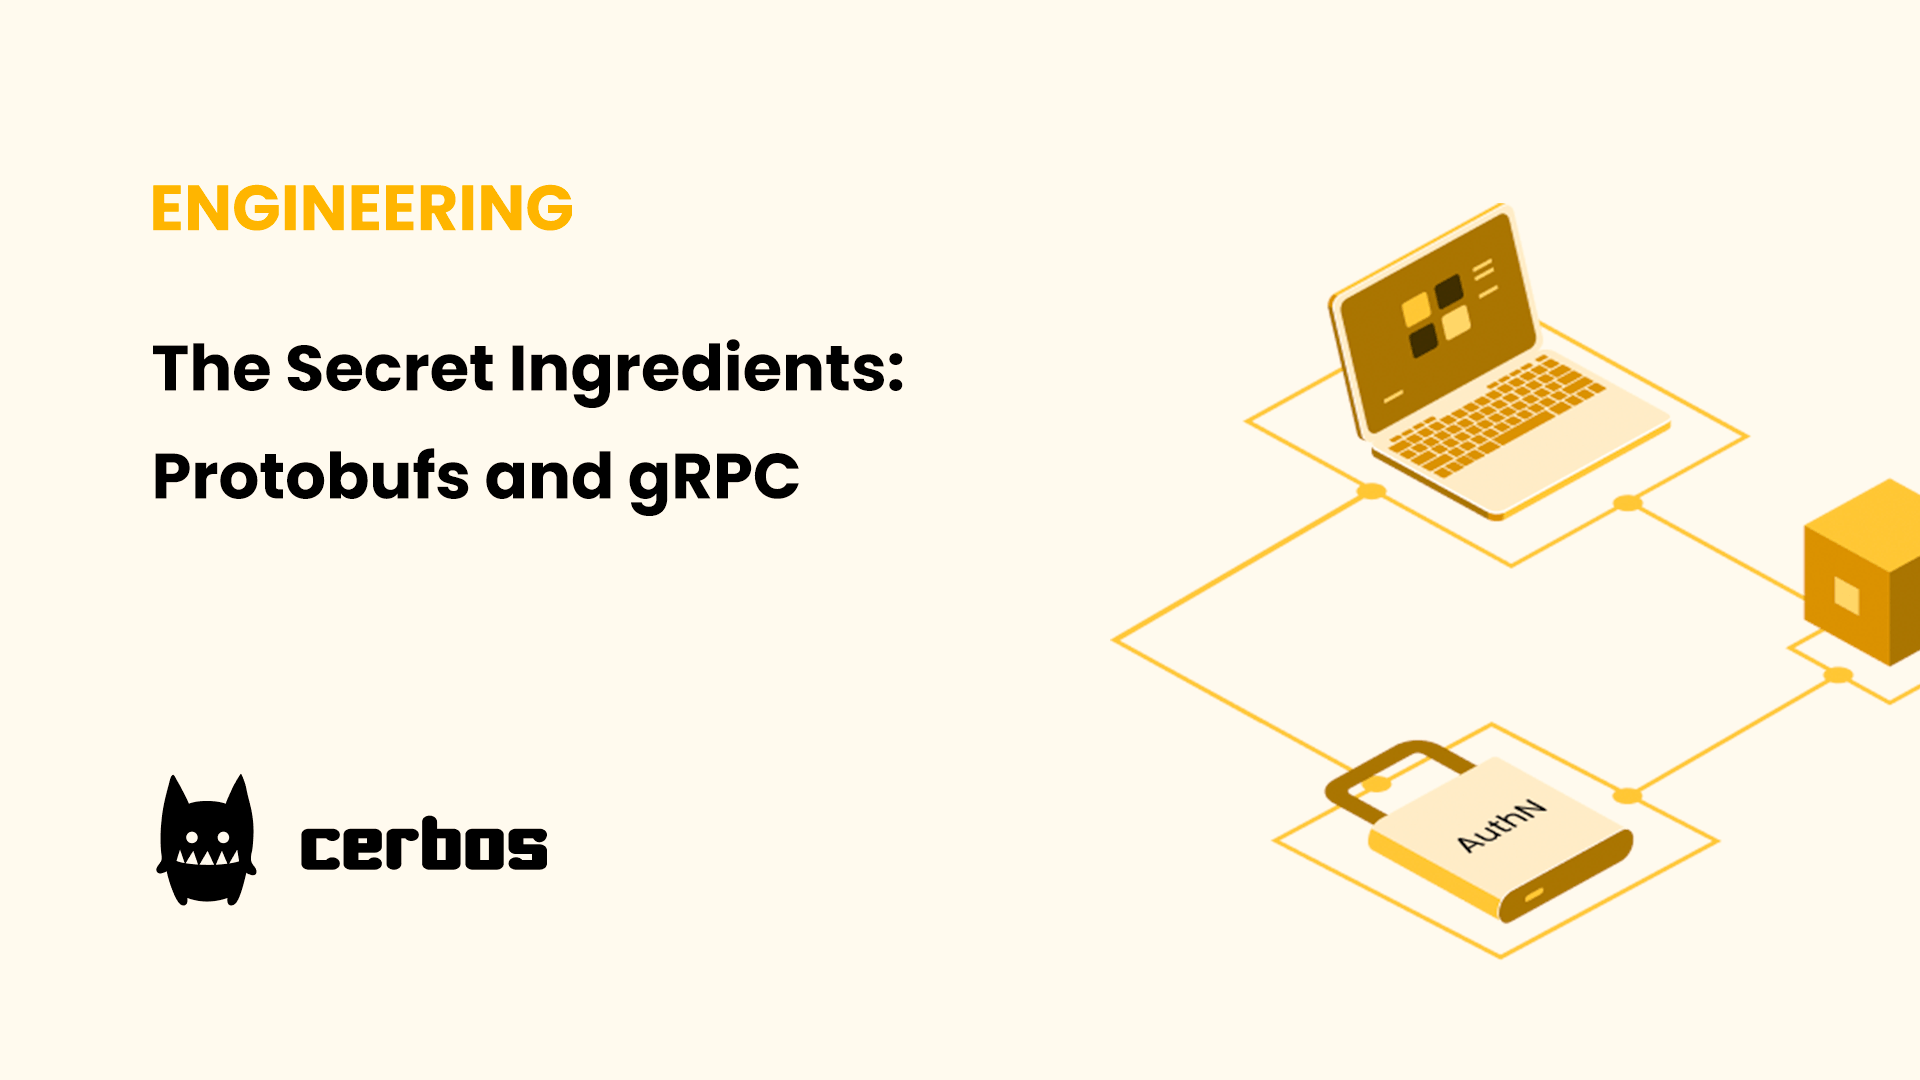 The Secret Ingredients: protobufs and gRPC